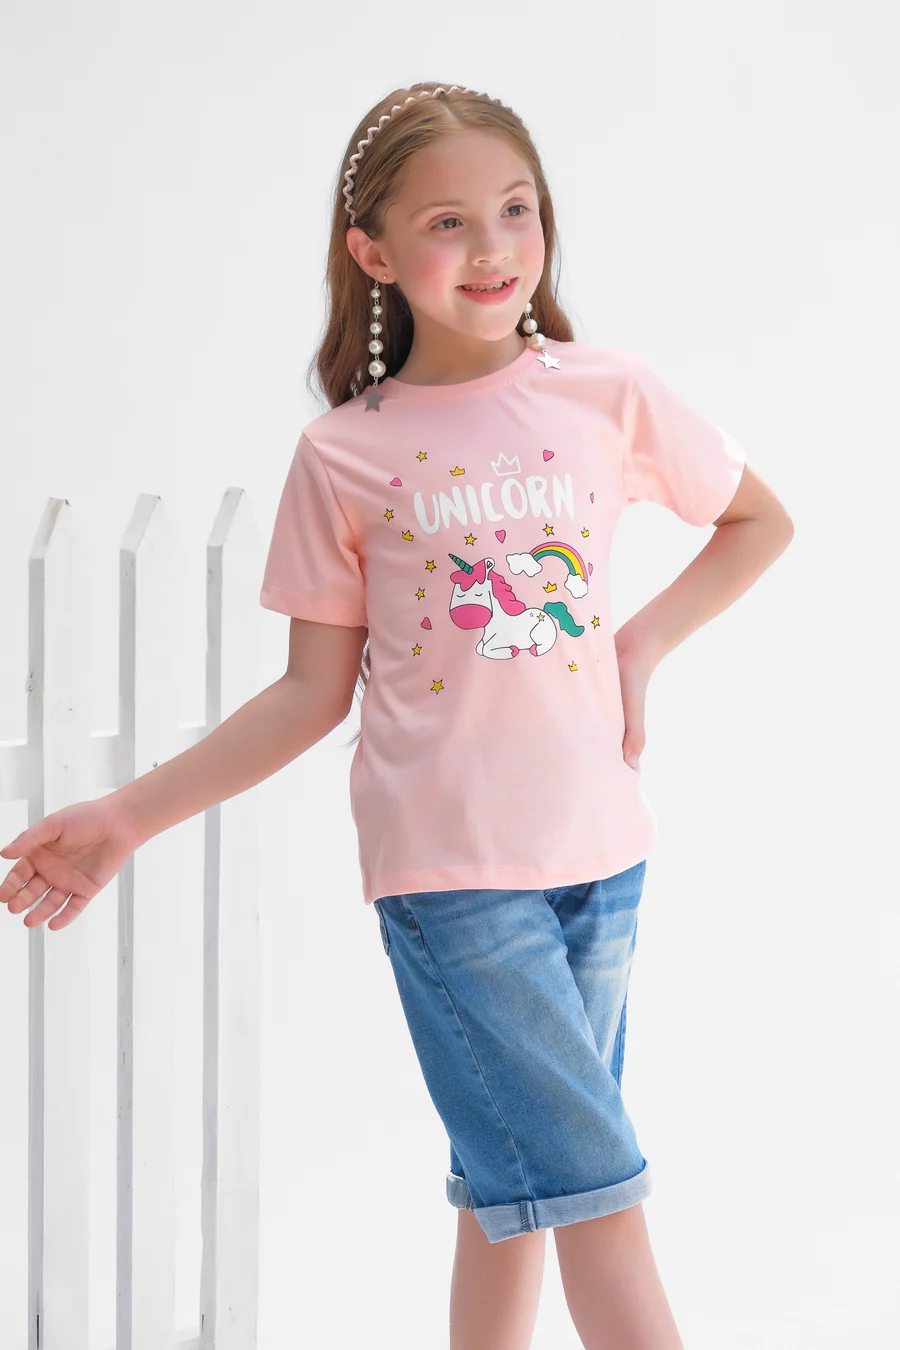 Unicorn - Half Sleeves T-Shirts For Kids - Pink - SBT-356